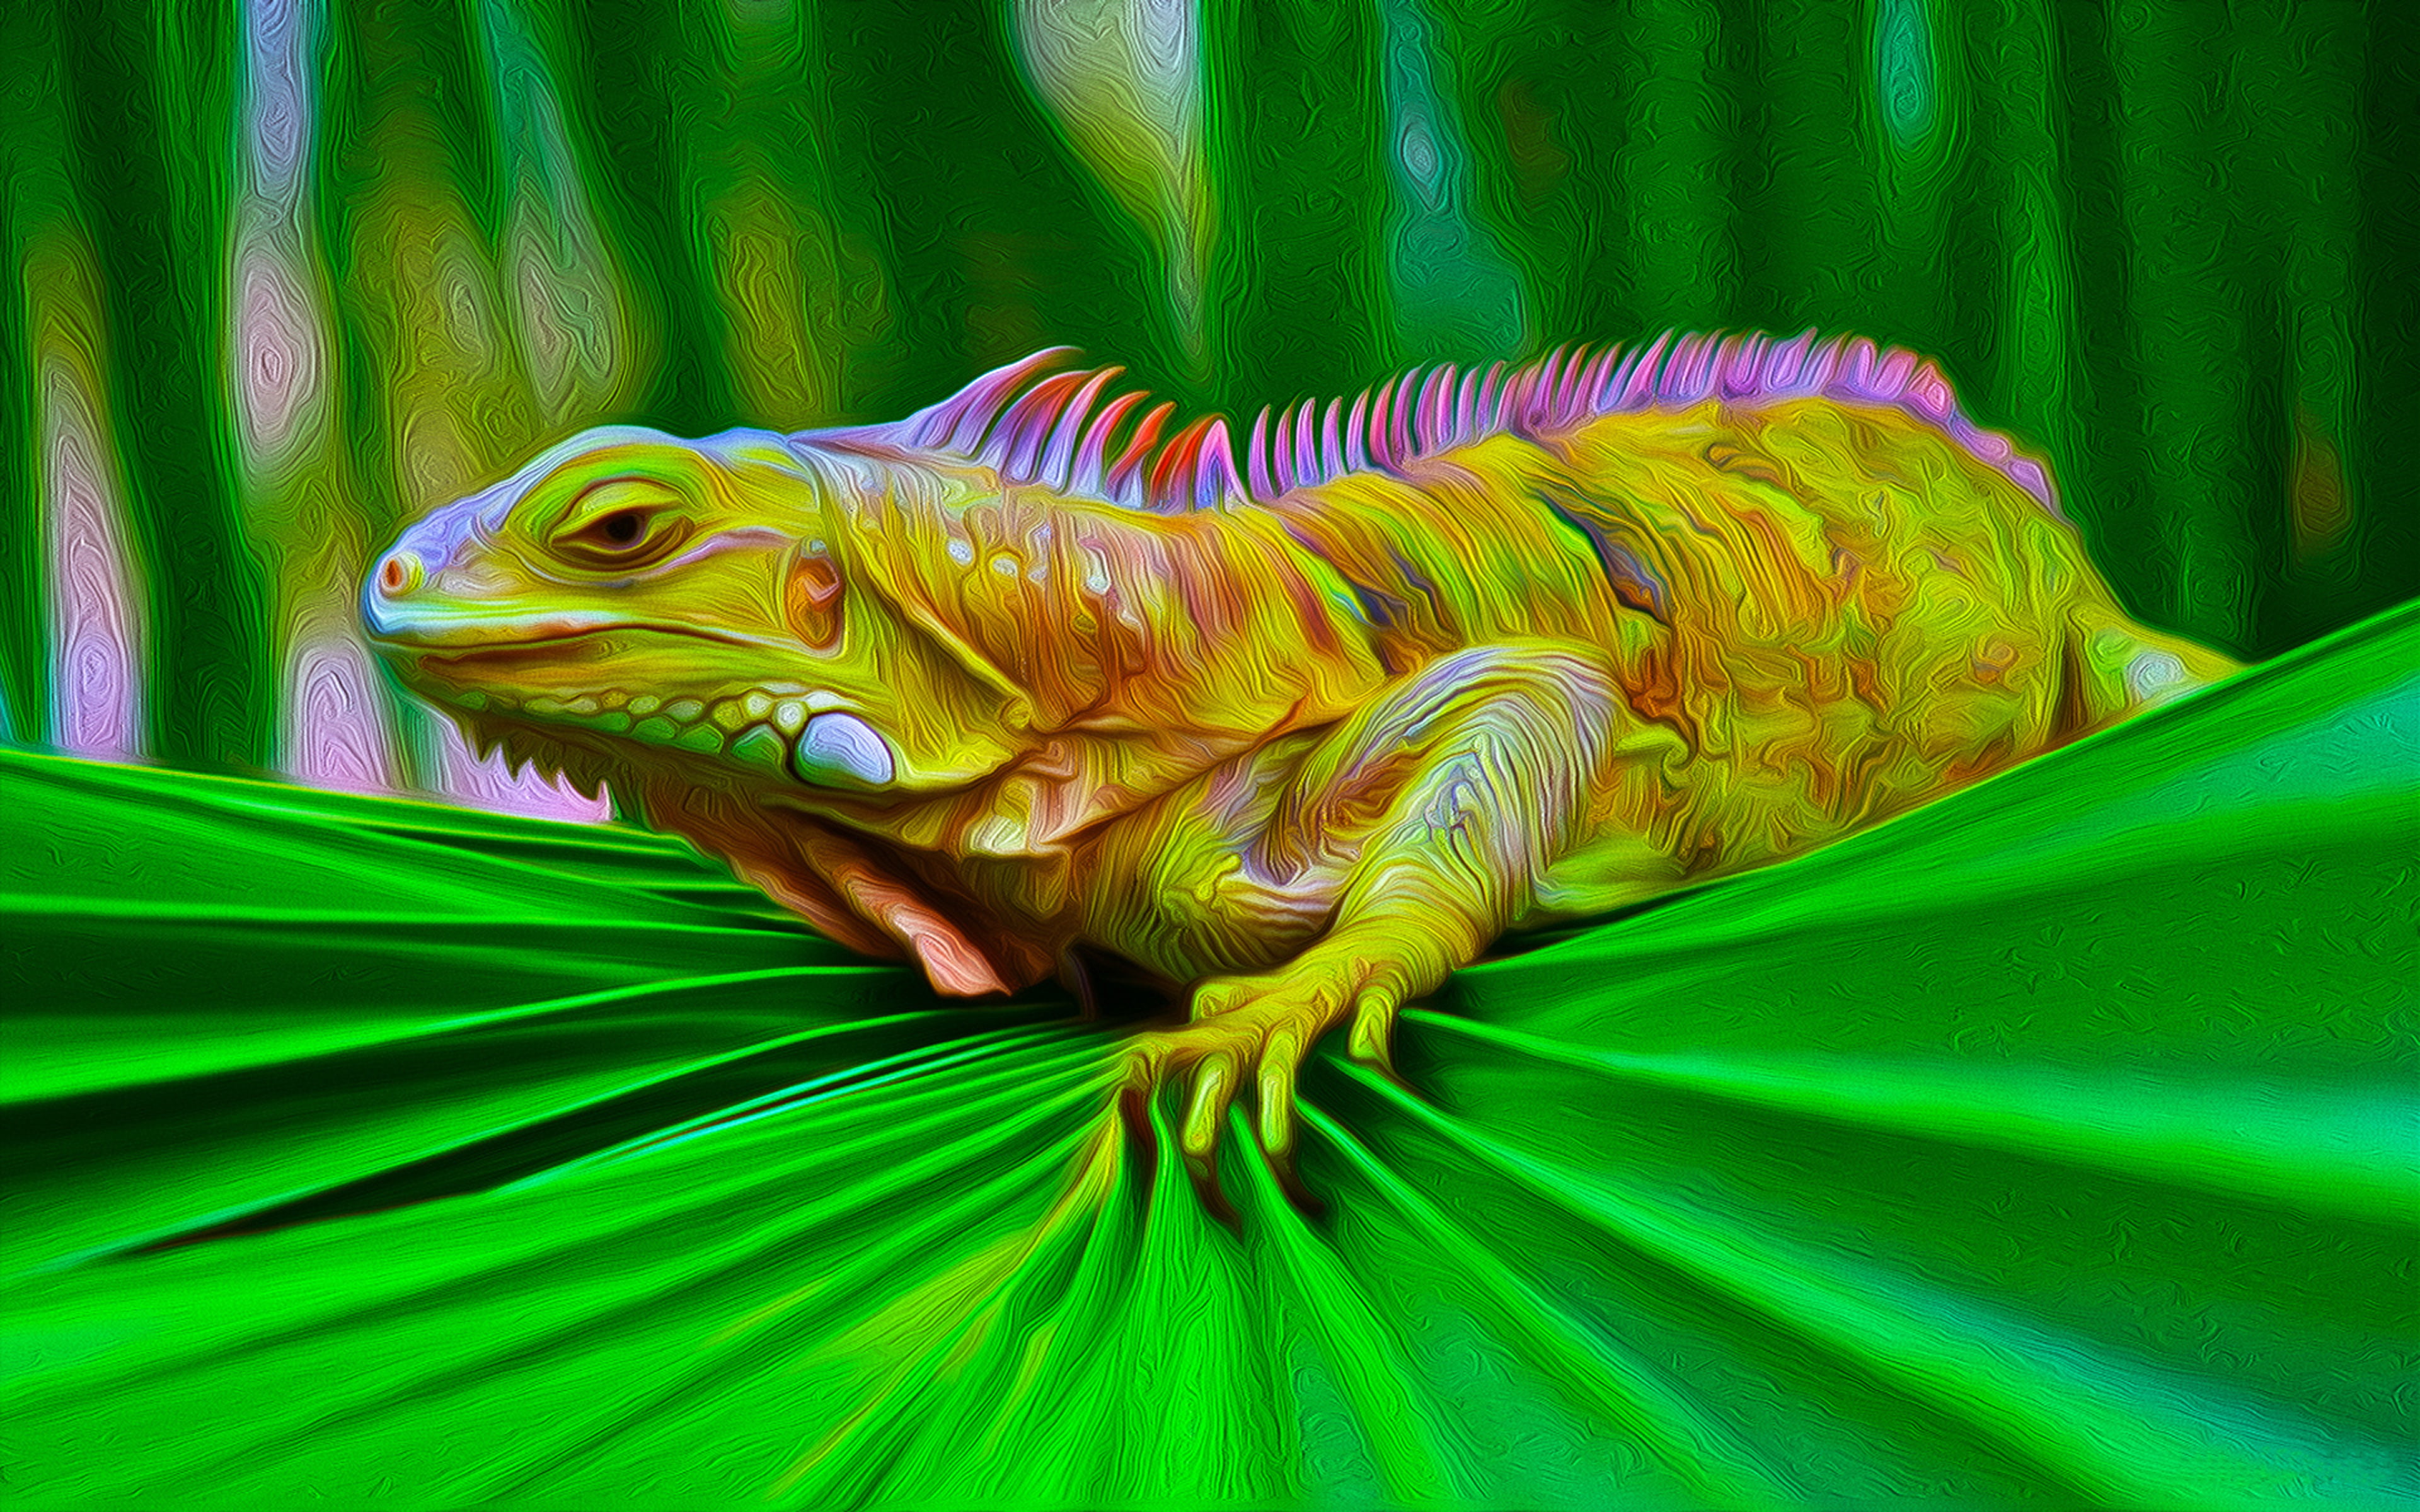 Iguana Colorful Lizard Computer Digital Art For Your Desktop Hd Wallpaper 3840×2400